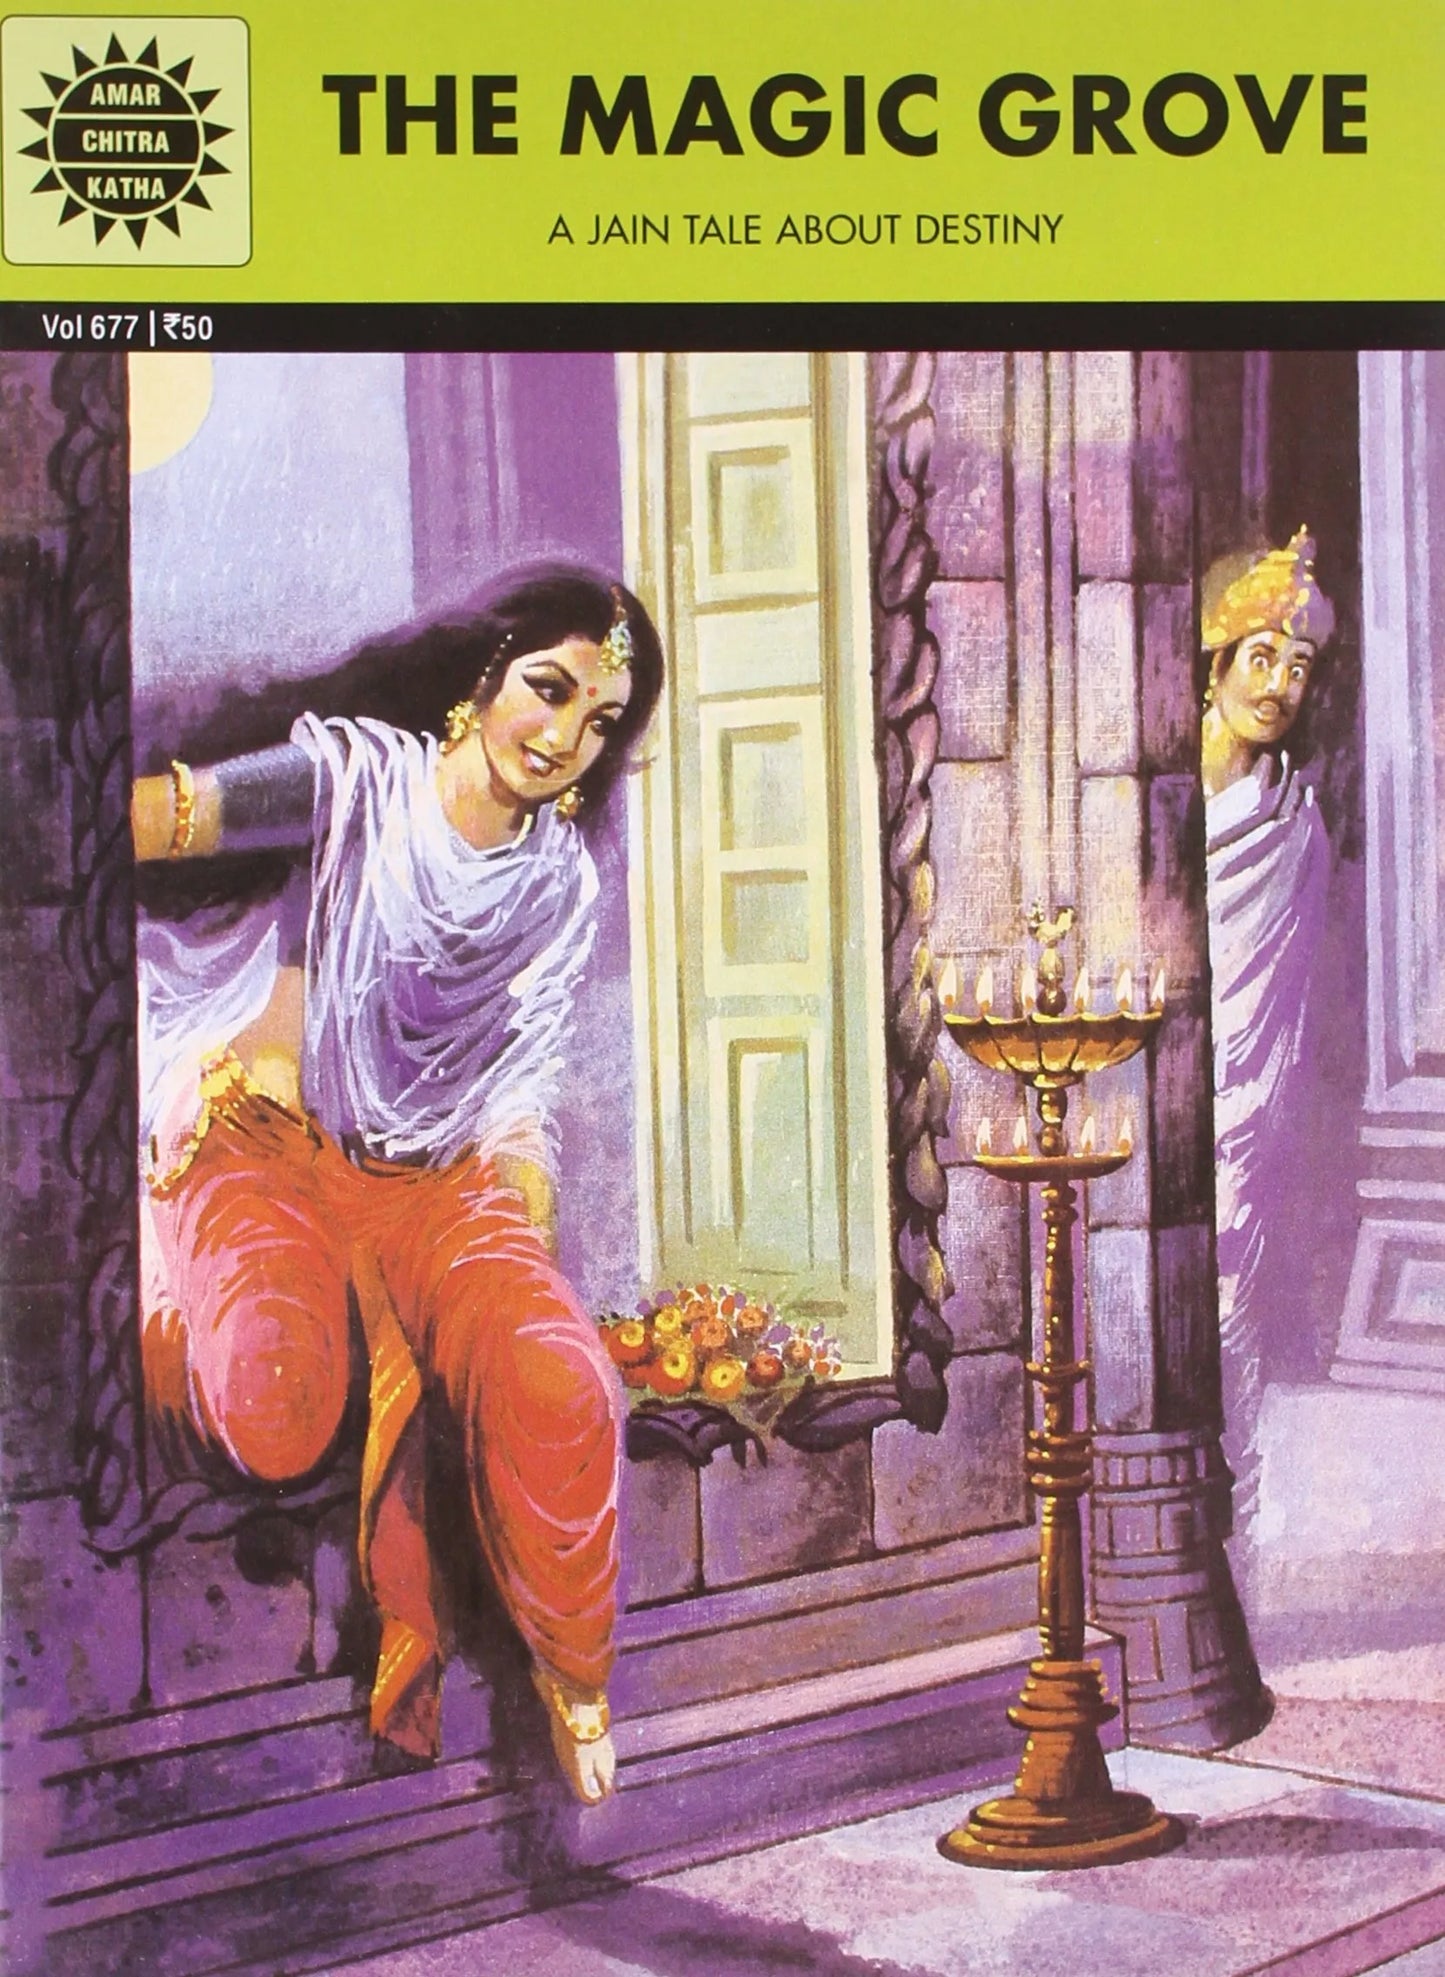 Amar Chitra Katha - The Magic Grove - A Jain Tale About Destiny